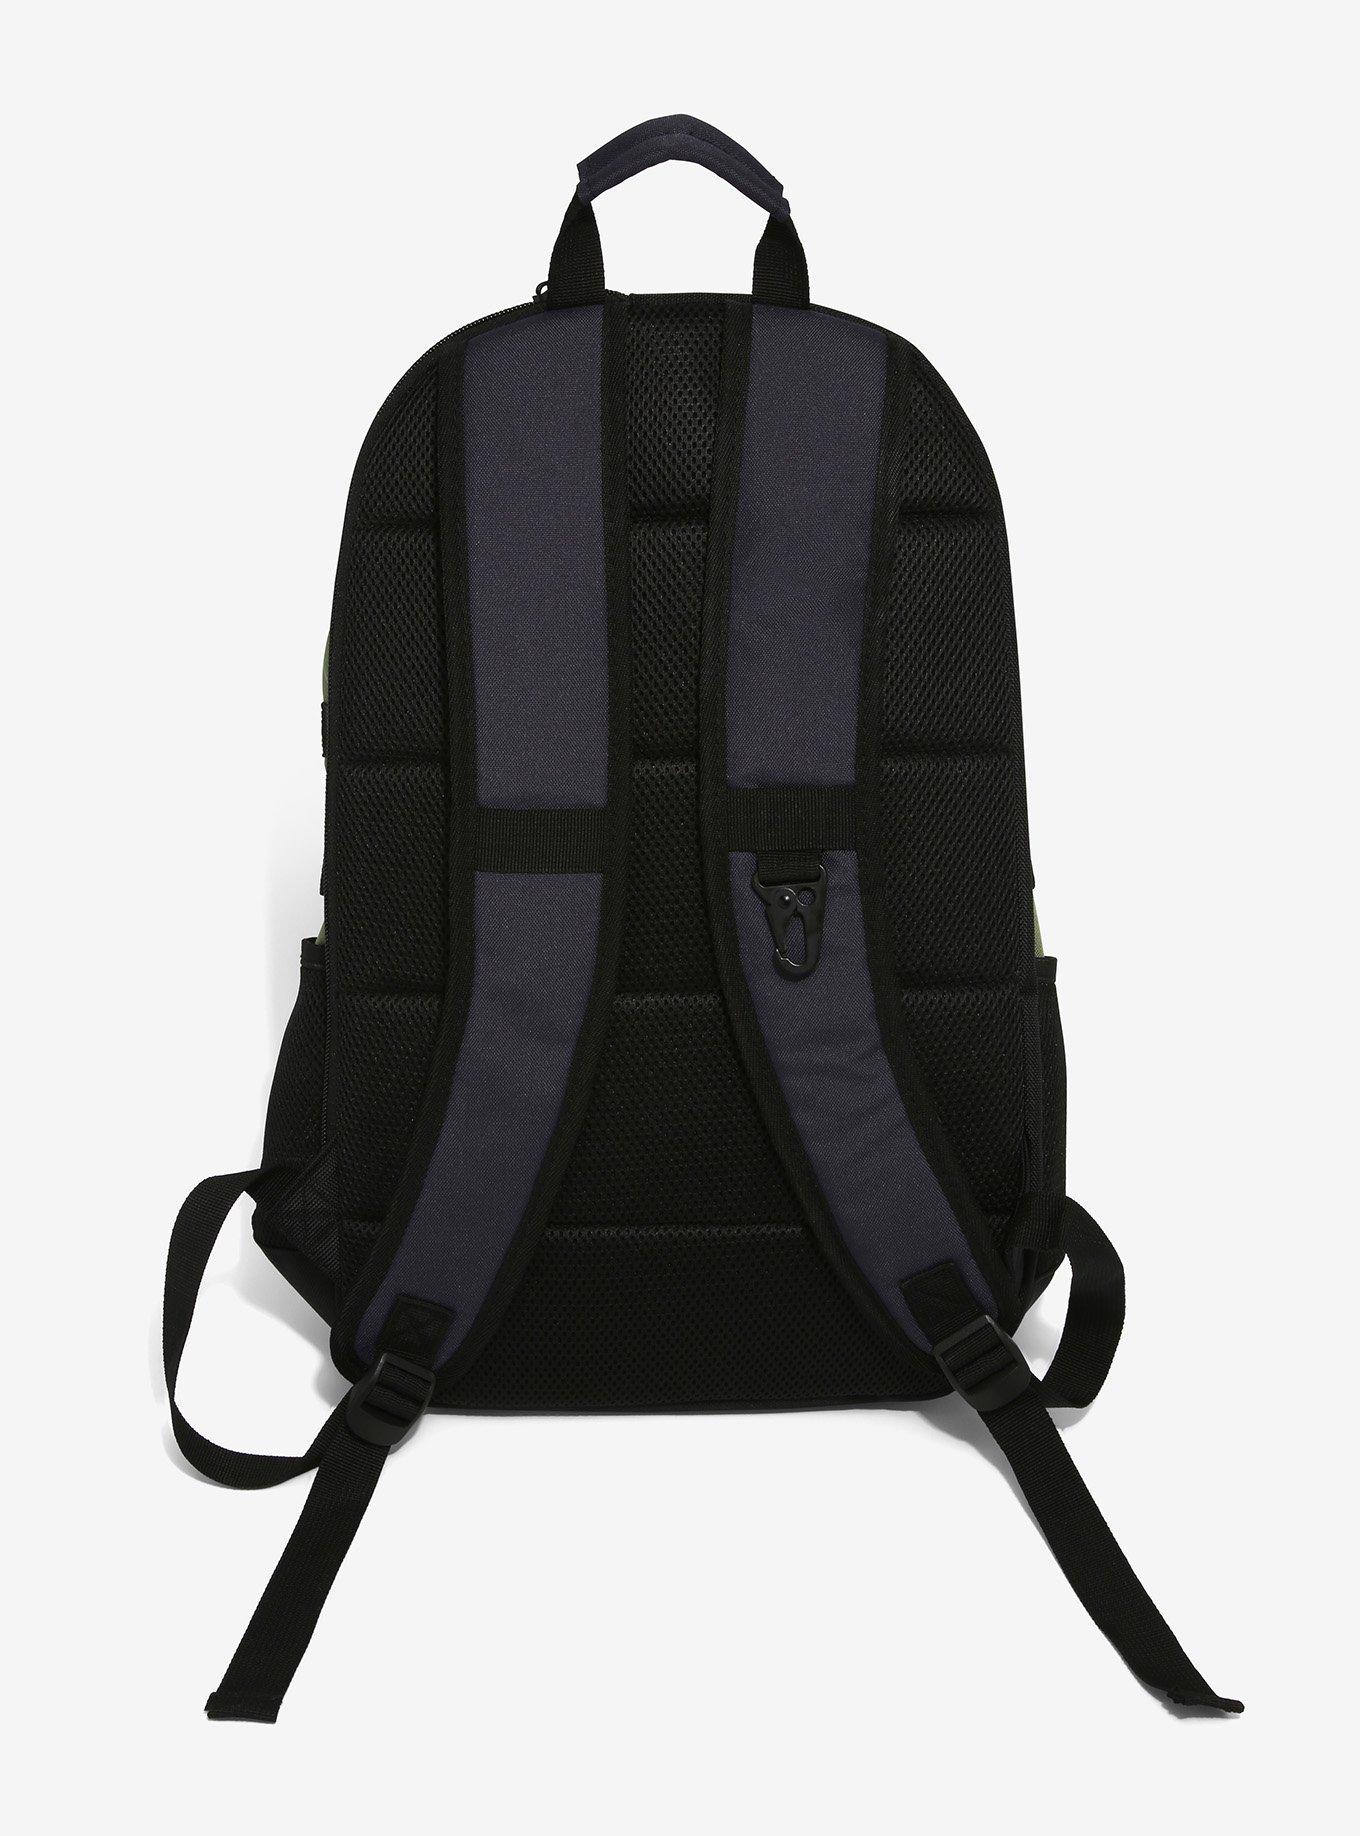 Naruto Shippuden Kakashi Built-Up Backpack